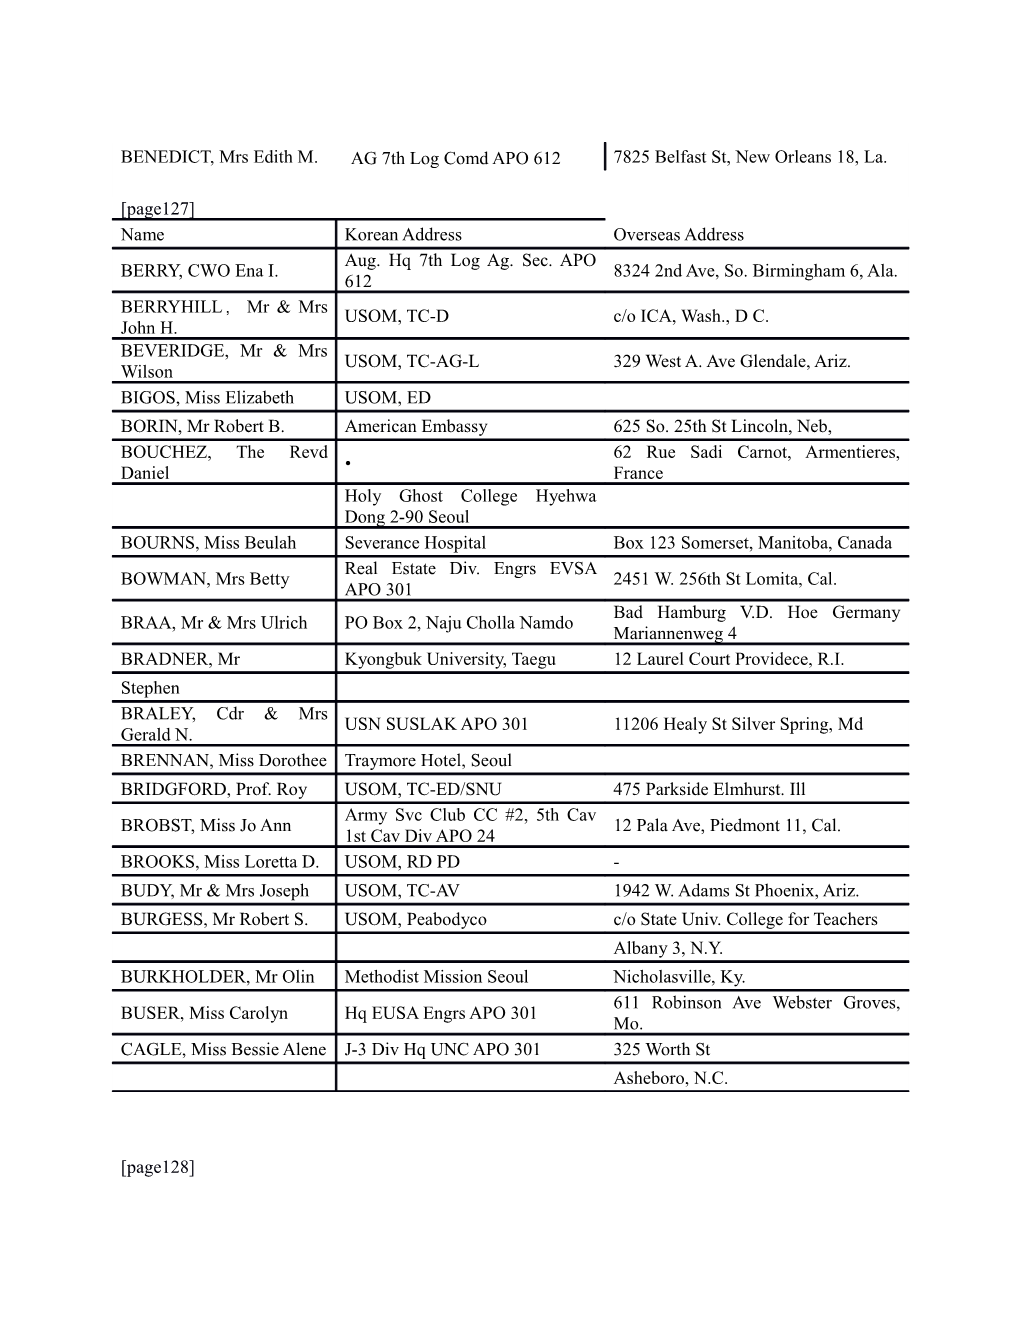 List of Members Royal Asiatic Society Korea Branch